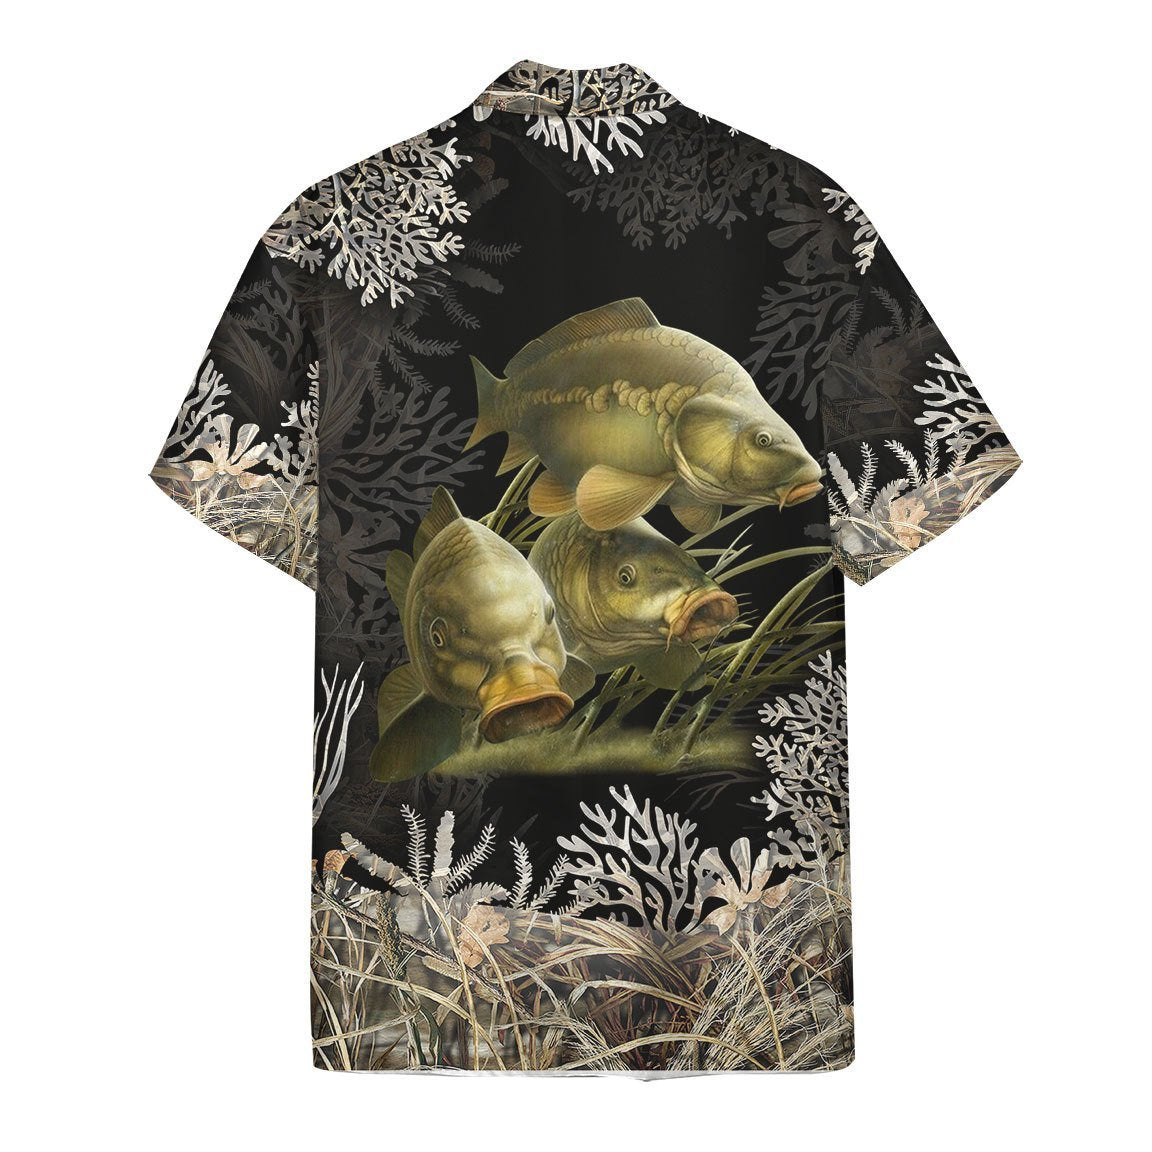 Gearhumans 3D Carp Fishing Hawaii shirt ZZ25031 Hawai Shirt 